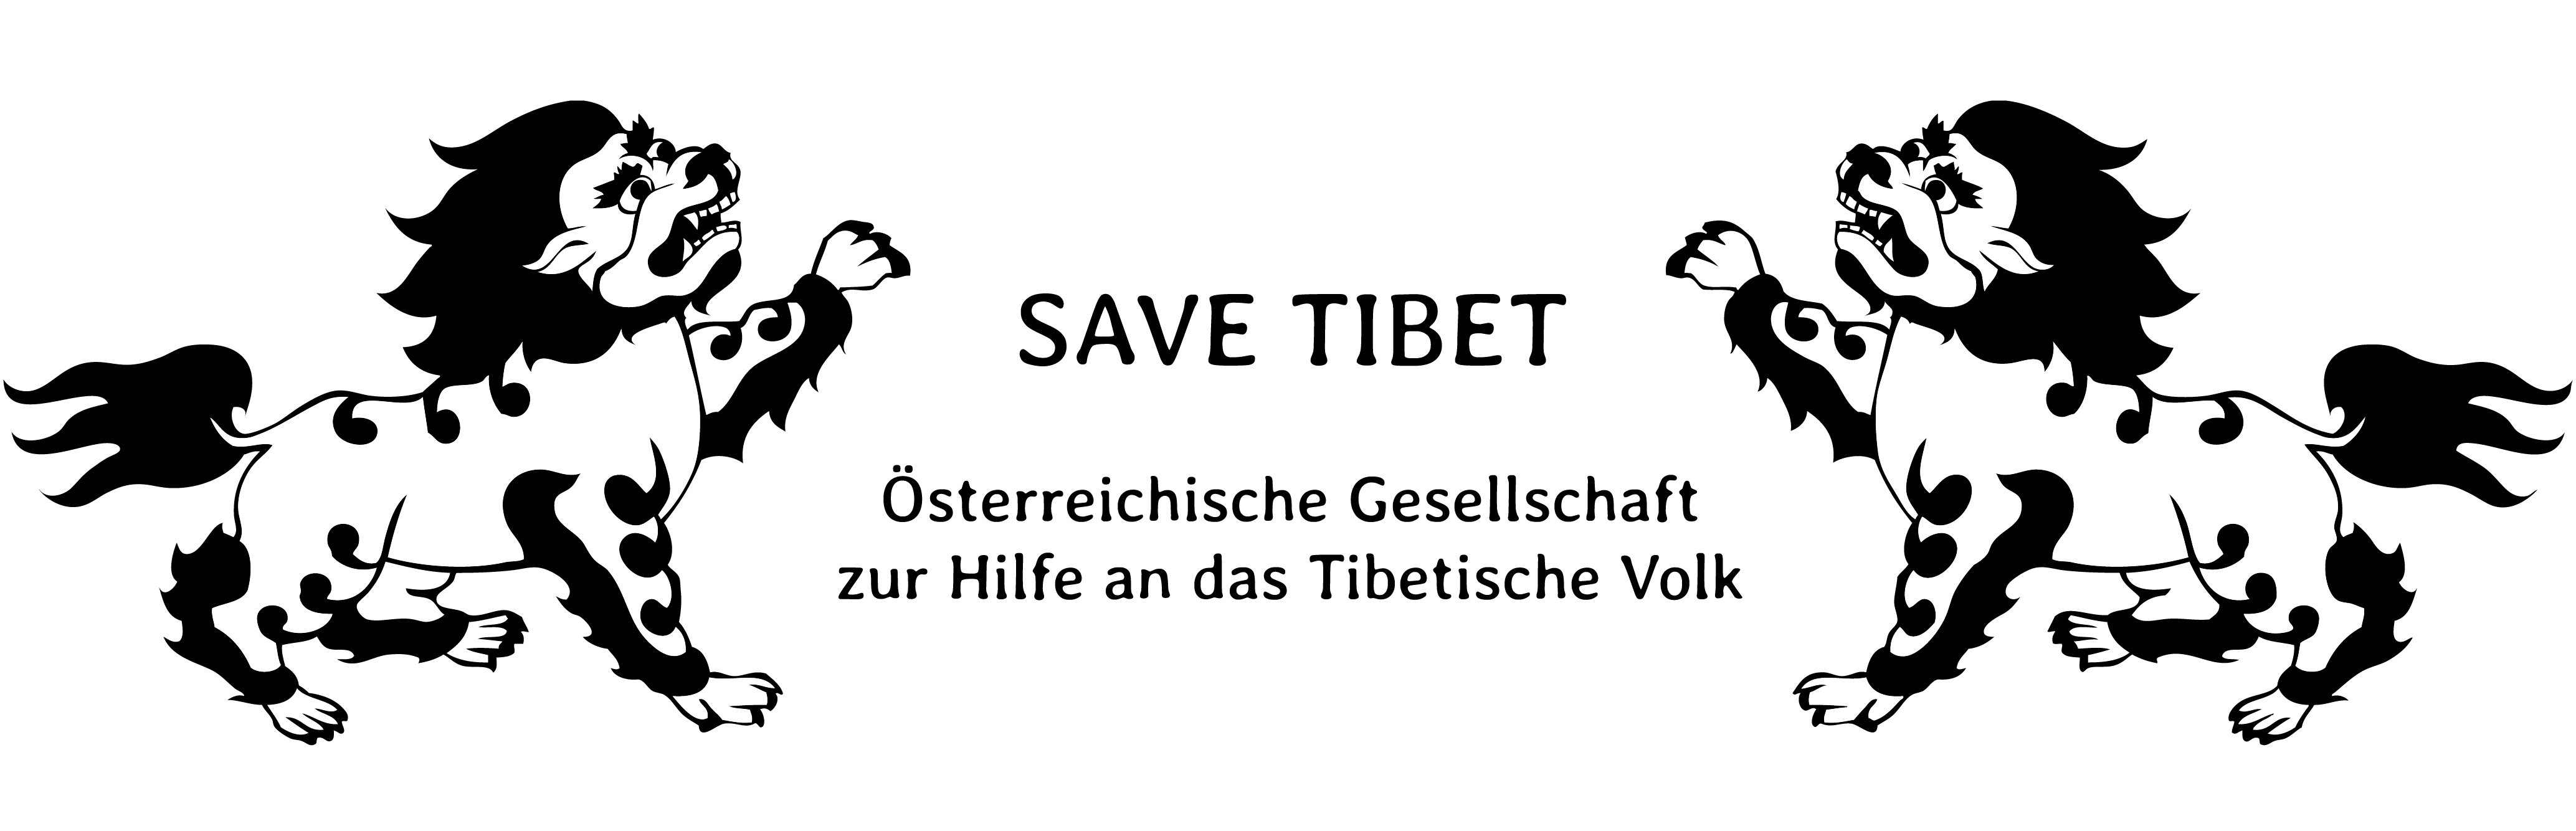 Save Tibet Logo Druckqualität